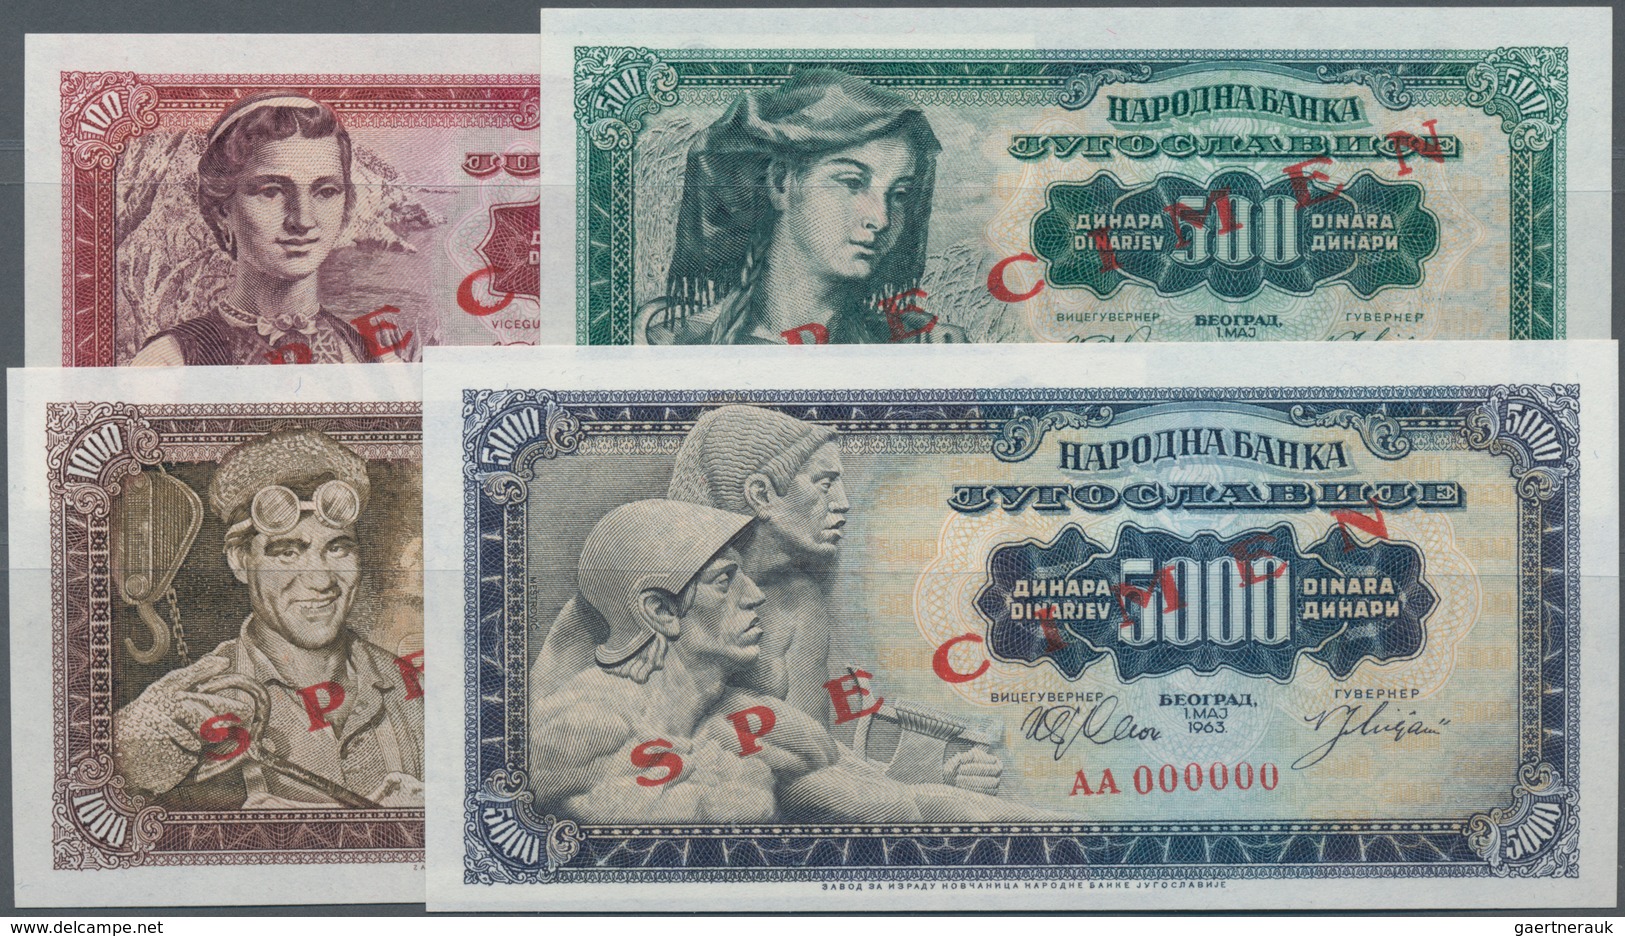 Yugoslavia / Jugoslavien: SPECIMEN Set Of The 1963 Series With 100, 500, 1000 And 5000 Dinara, P.73s - Yugoslavia